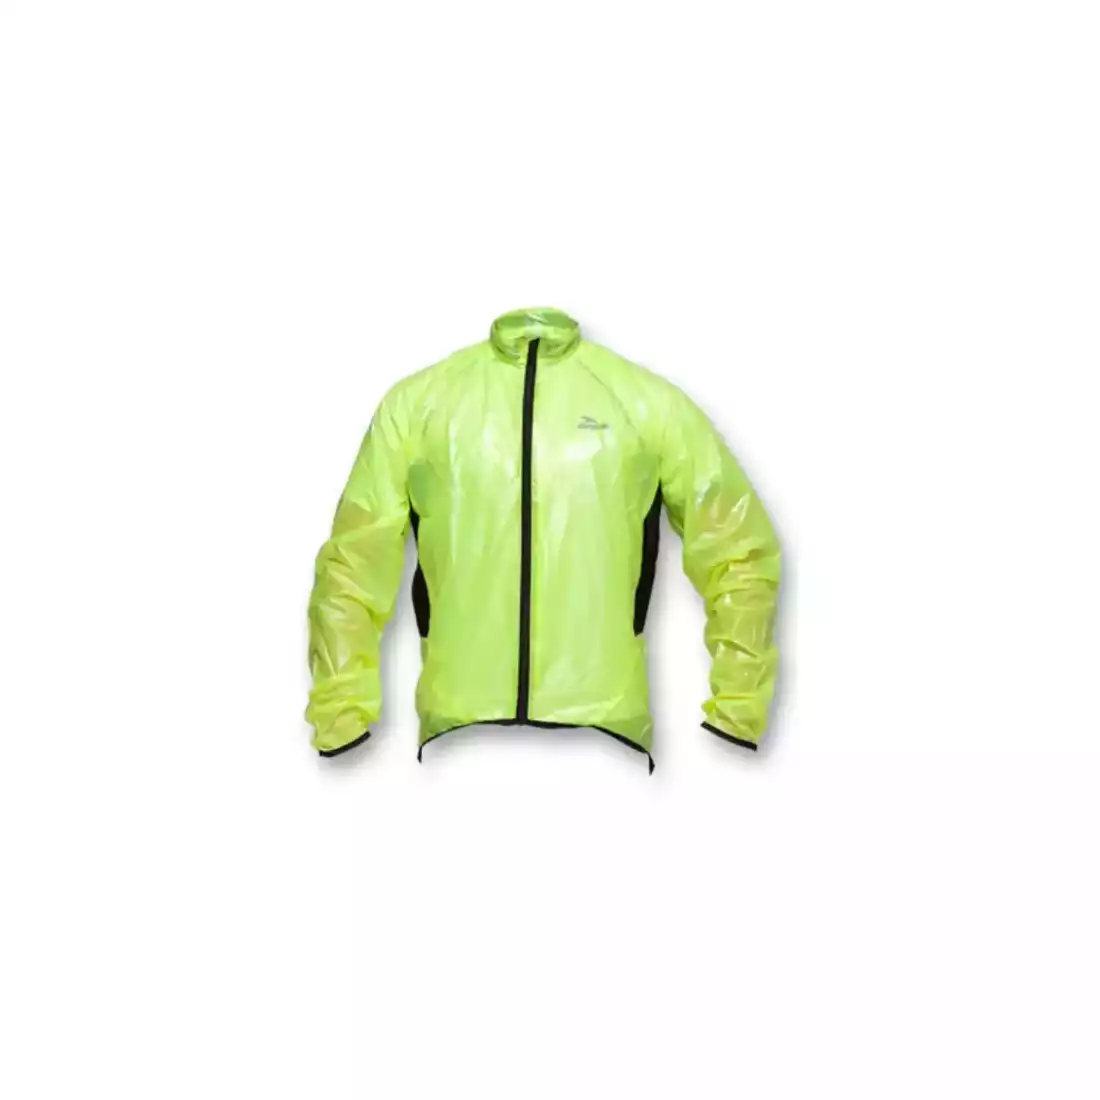 Rogelli pánska cyklistická bunda, odolná proti dažďu CROTONE DRYTEK, žltá